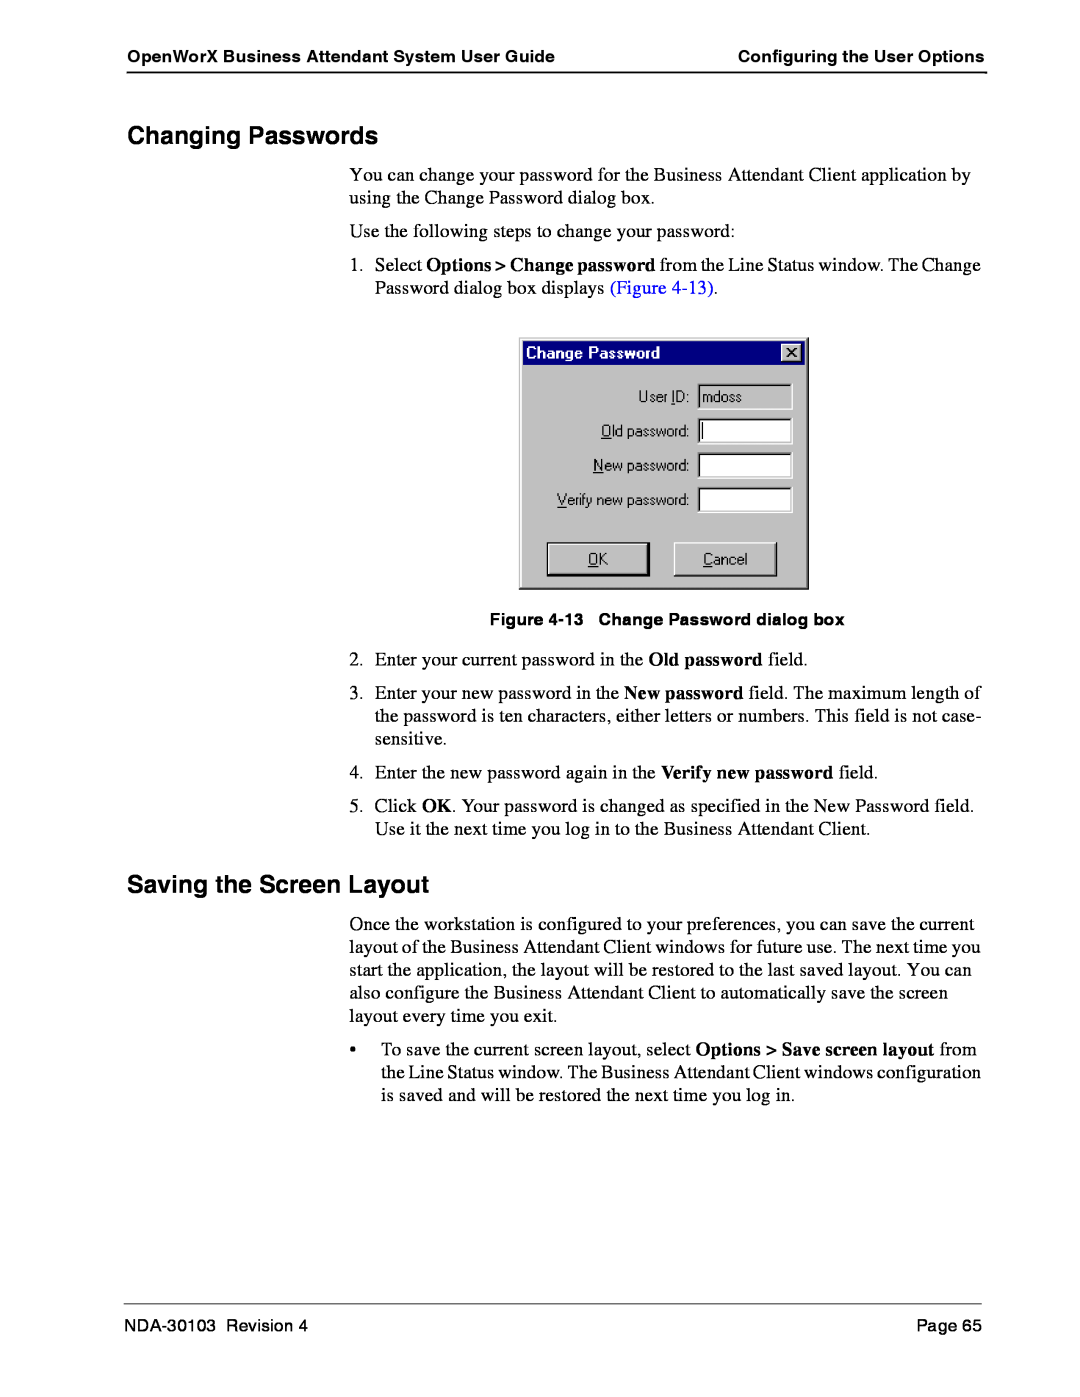 NEC NDA-30103-004 manual Changing Passwords, Saving the Screen Layout 